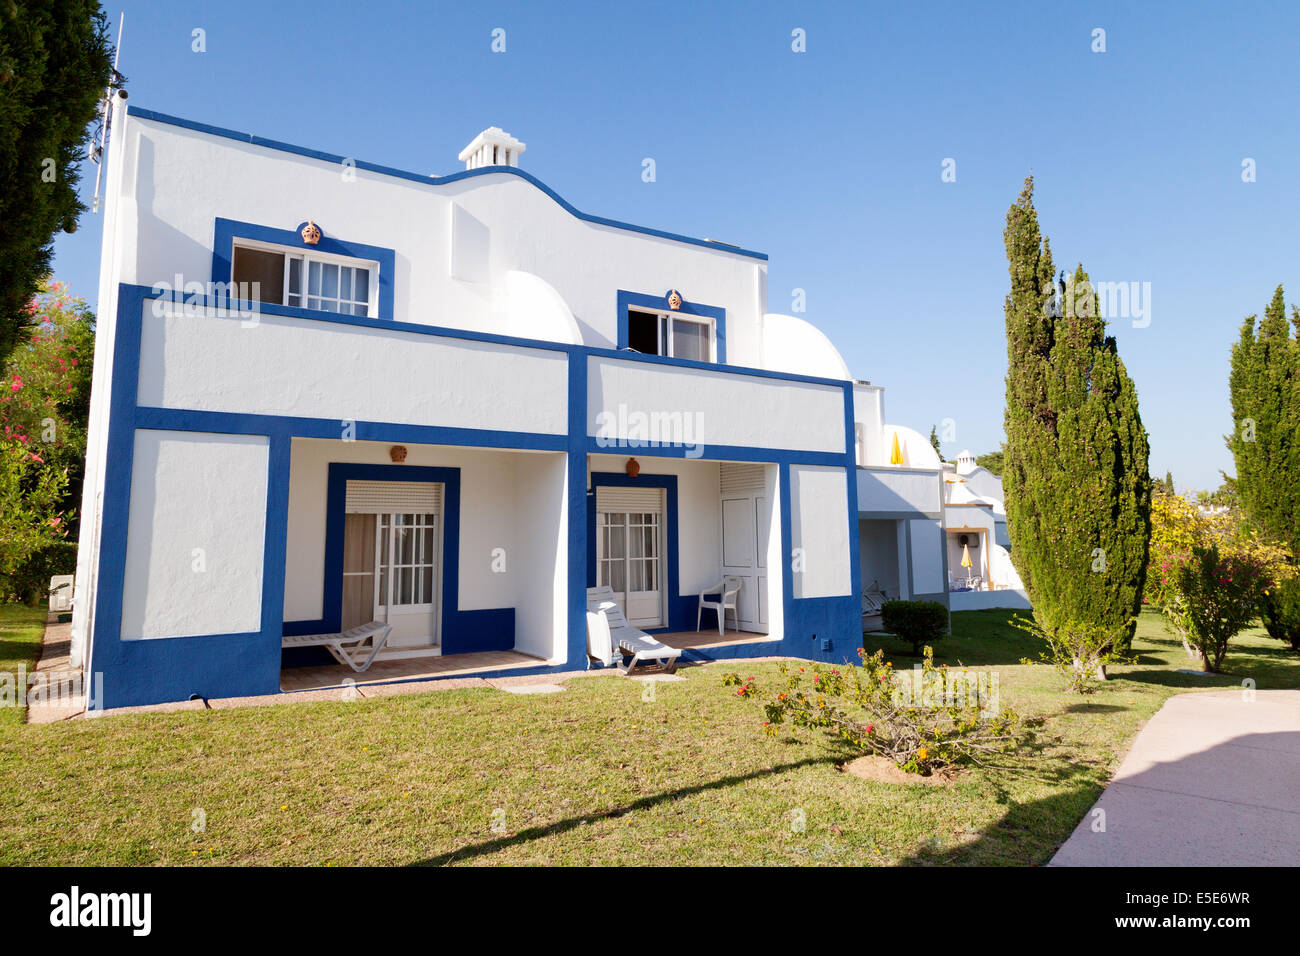 Holiday villas in the Rocha Brava holiday complex, Algarve, Portugal, Europe Stock Photo